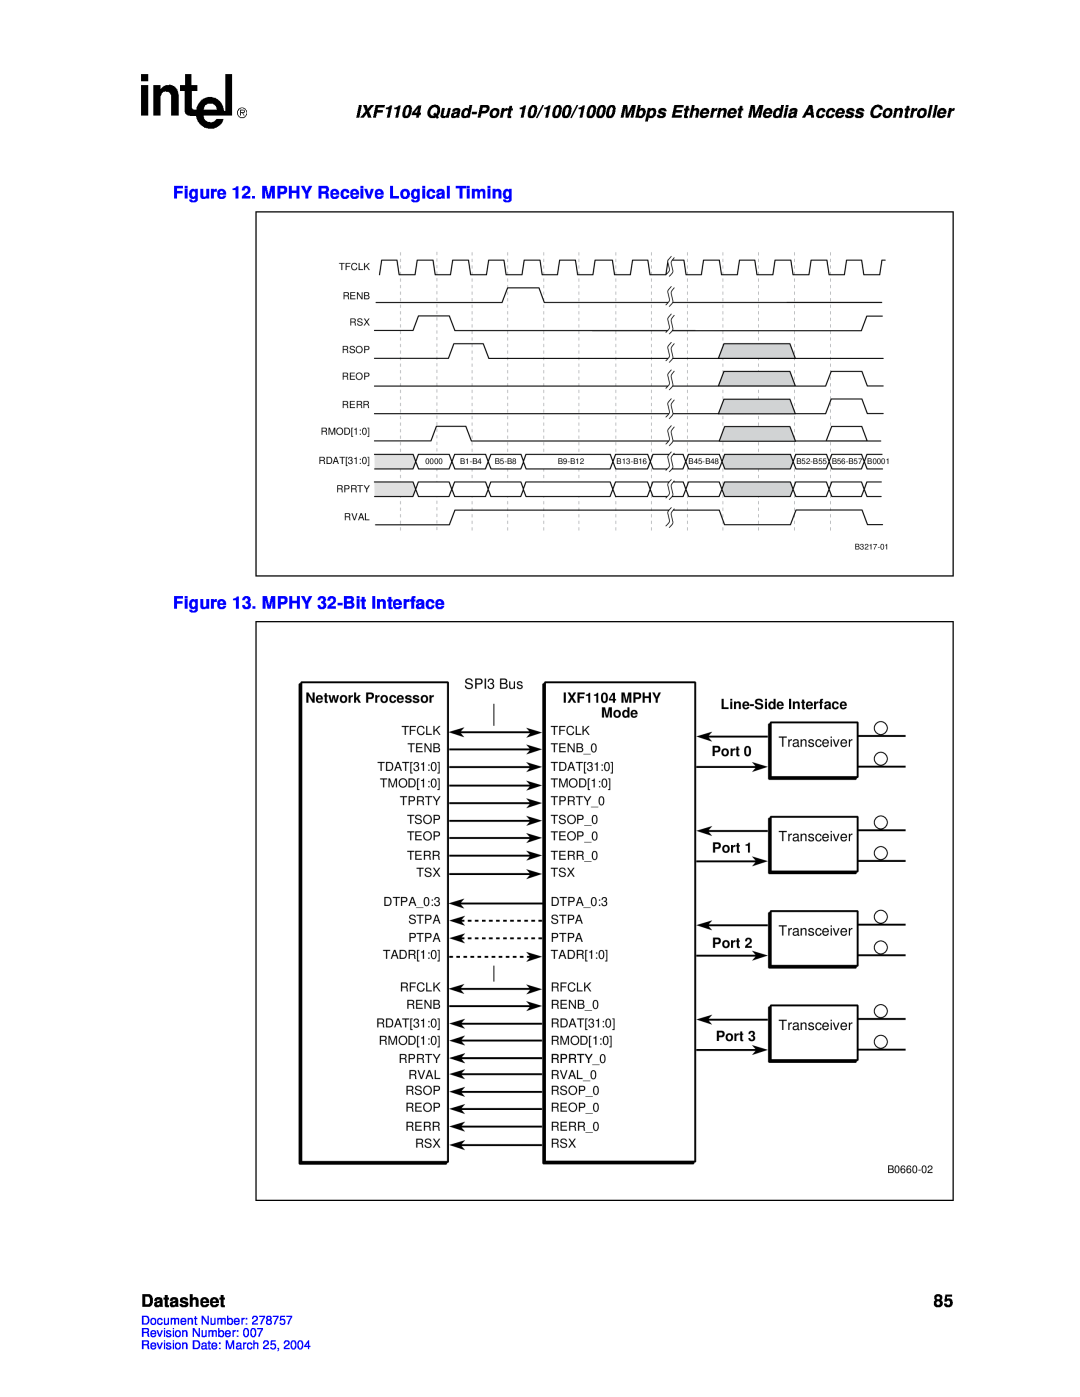 Intel manual Datasheet, Network Processor, IXF1104 MPHY, Line-SideInterface, Mode, Port 